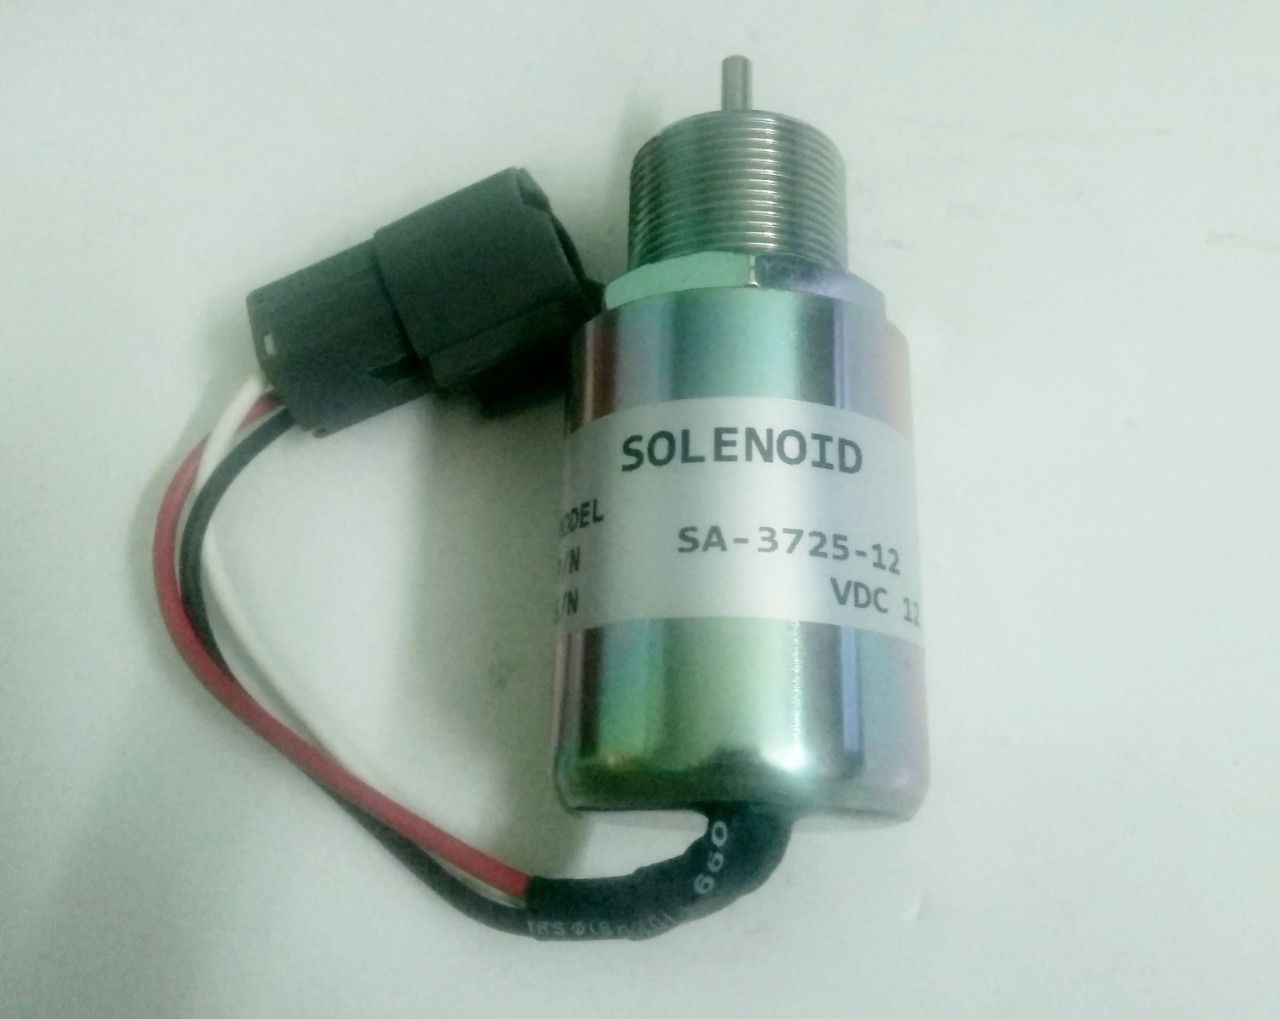 Solenoid SA-3725-12